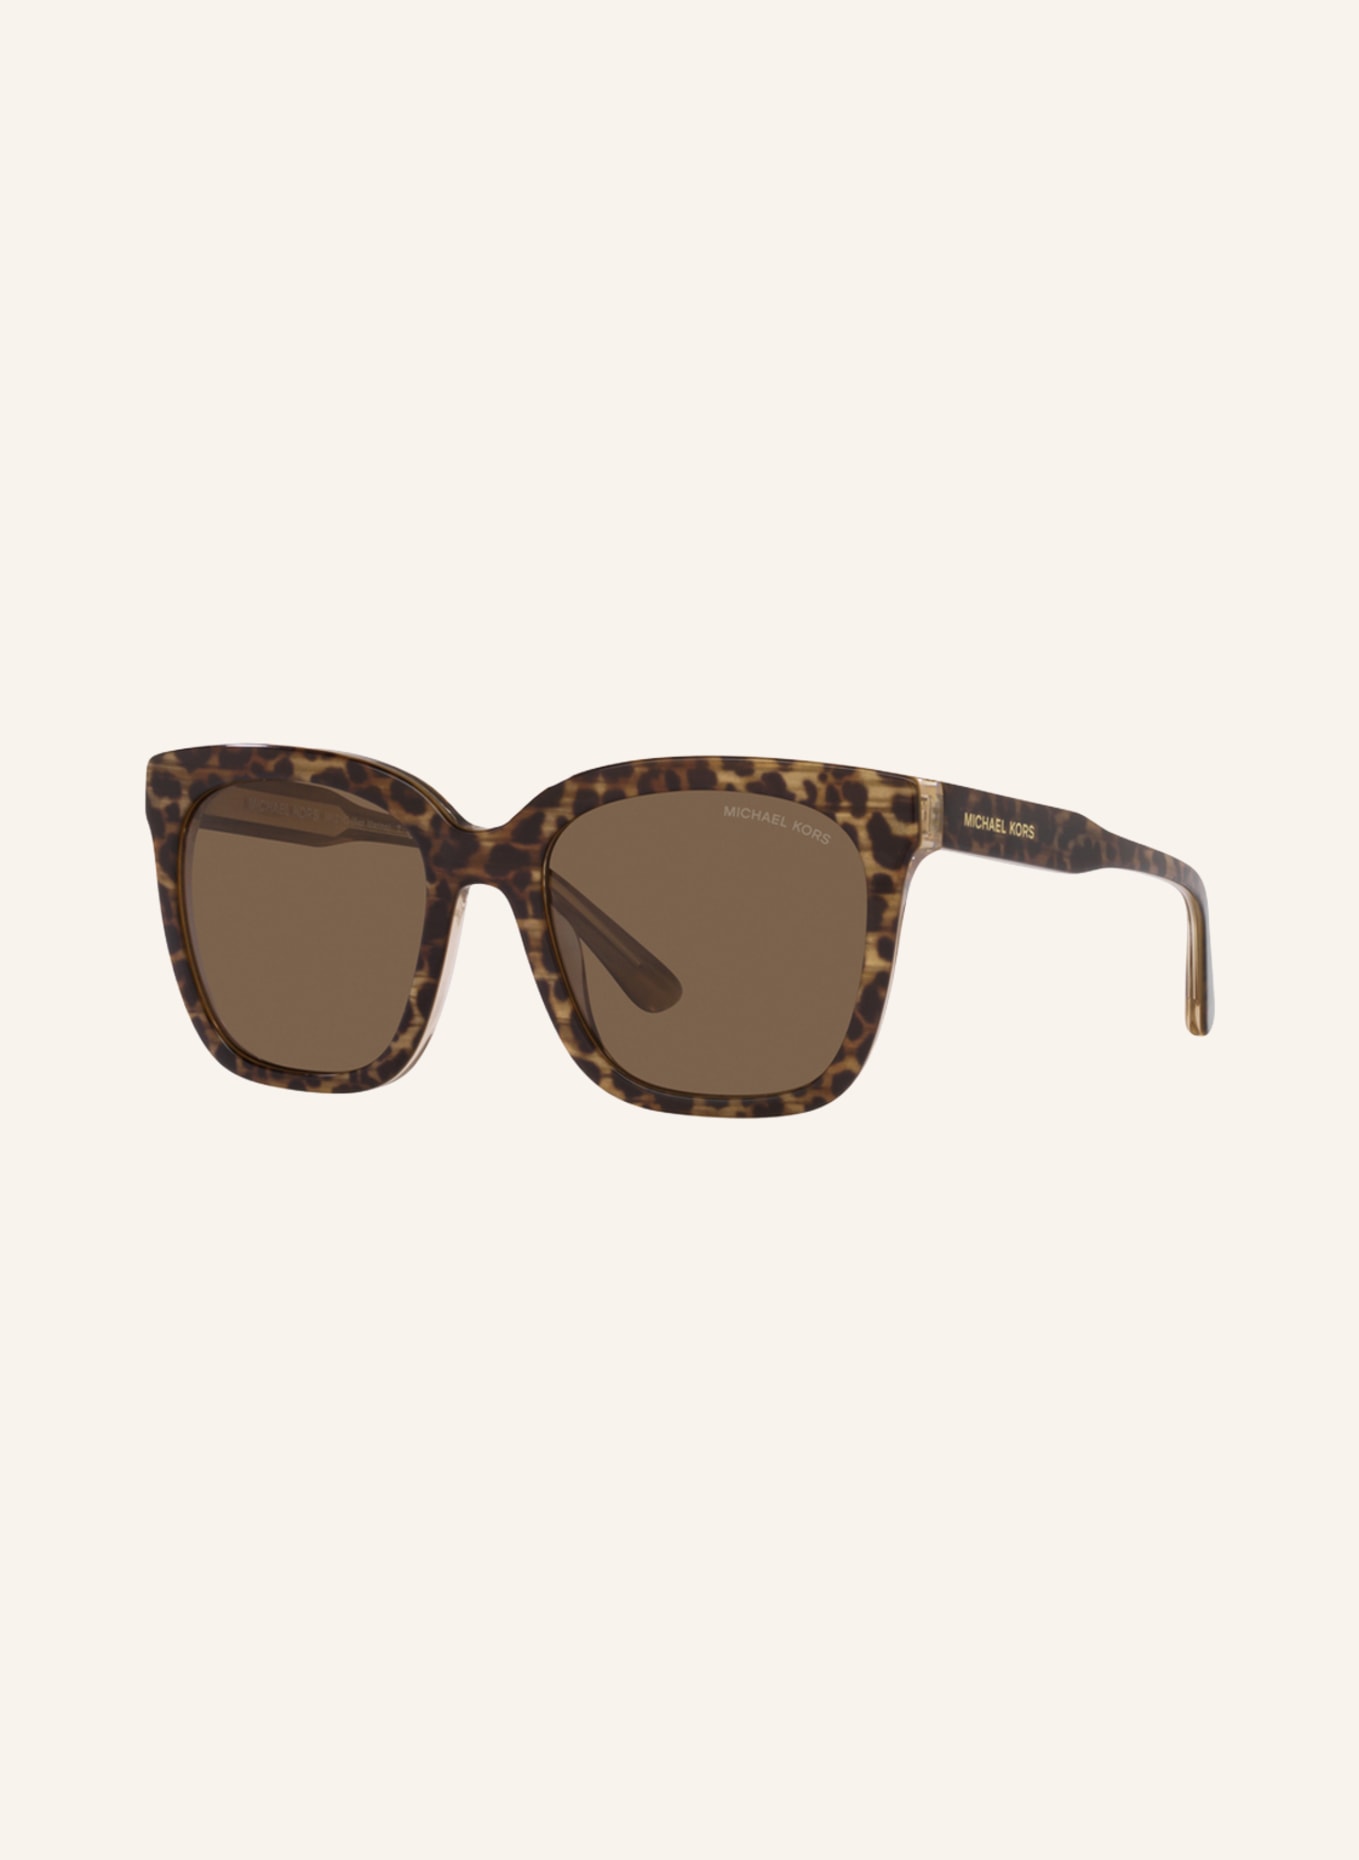 Michael Kors Halifax MK2145 Sunglasses Mens Square Shape  EyeSpecscom